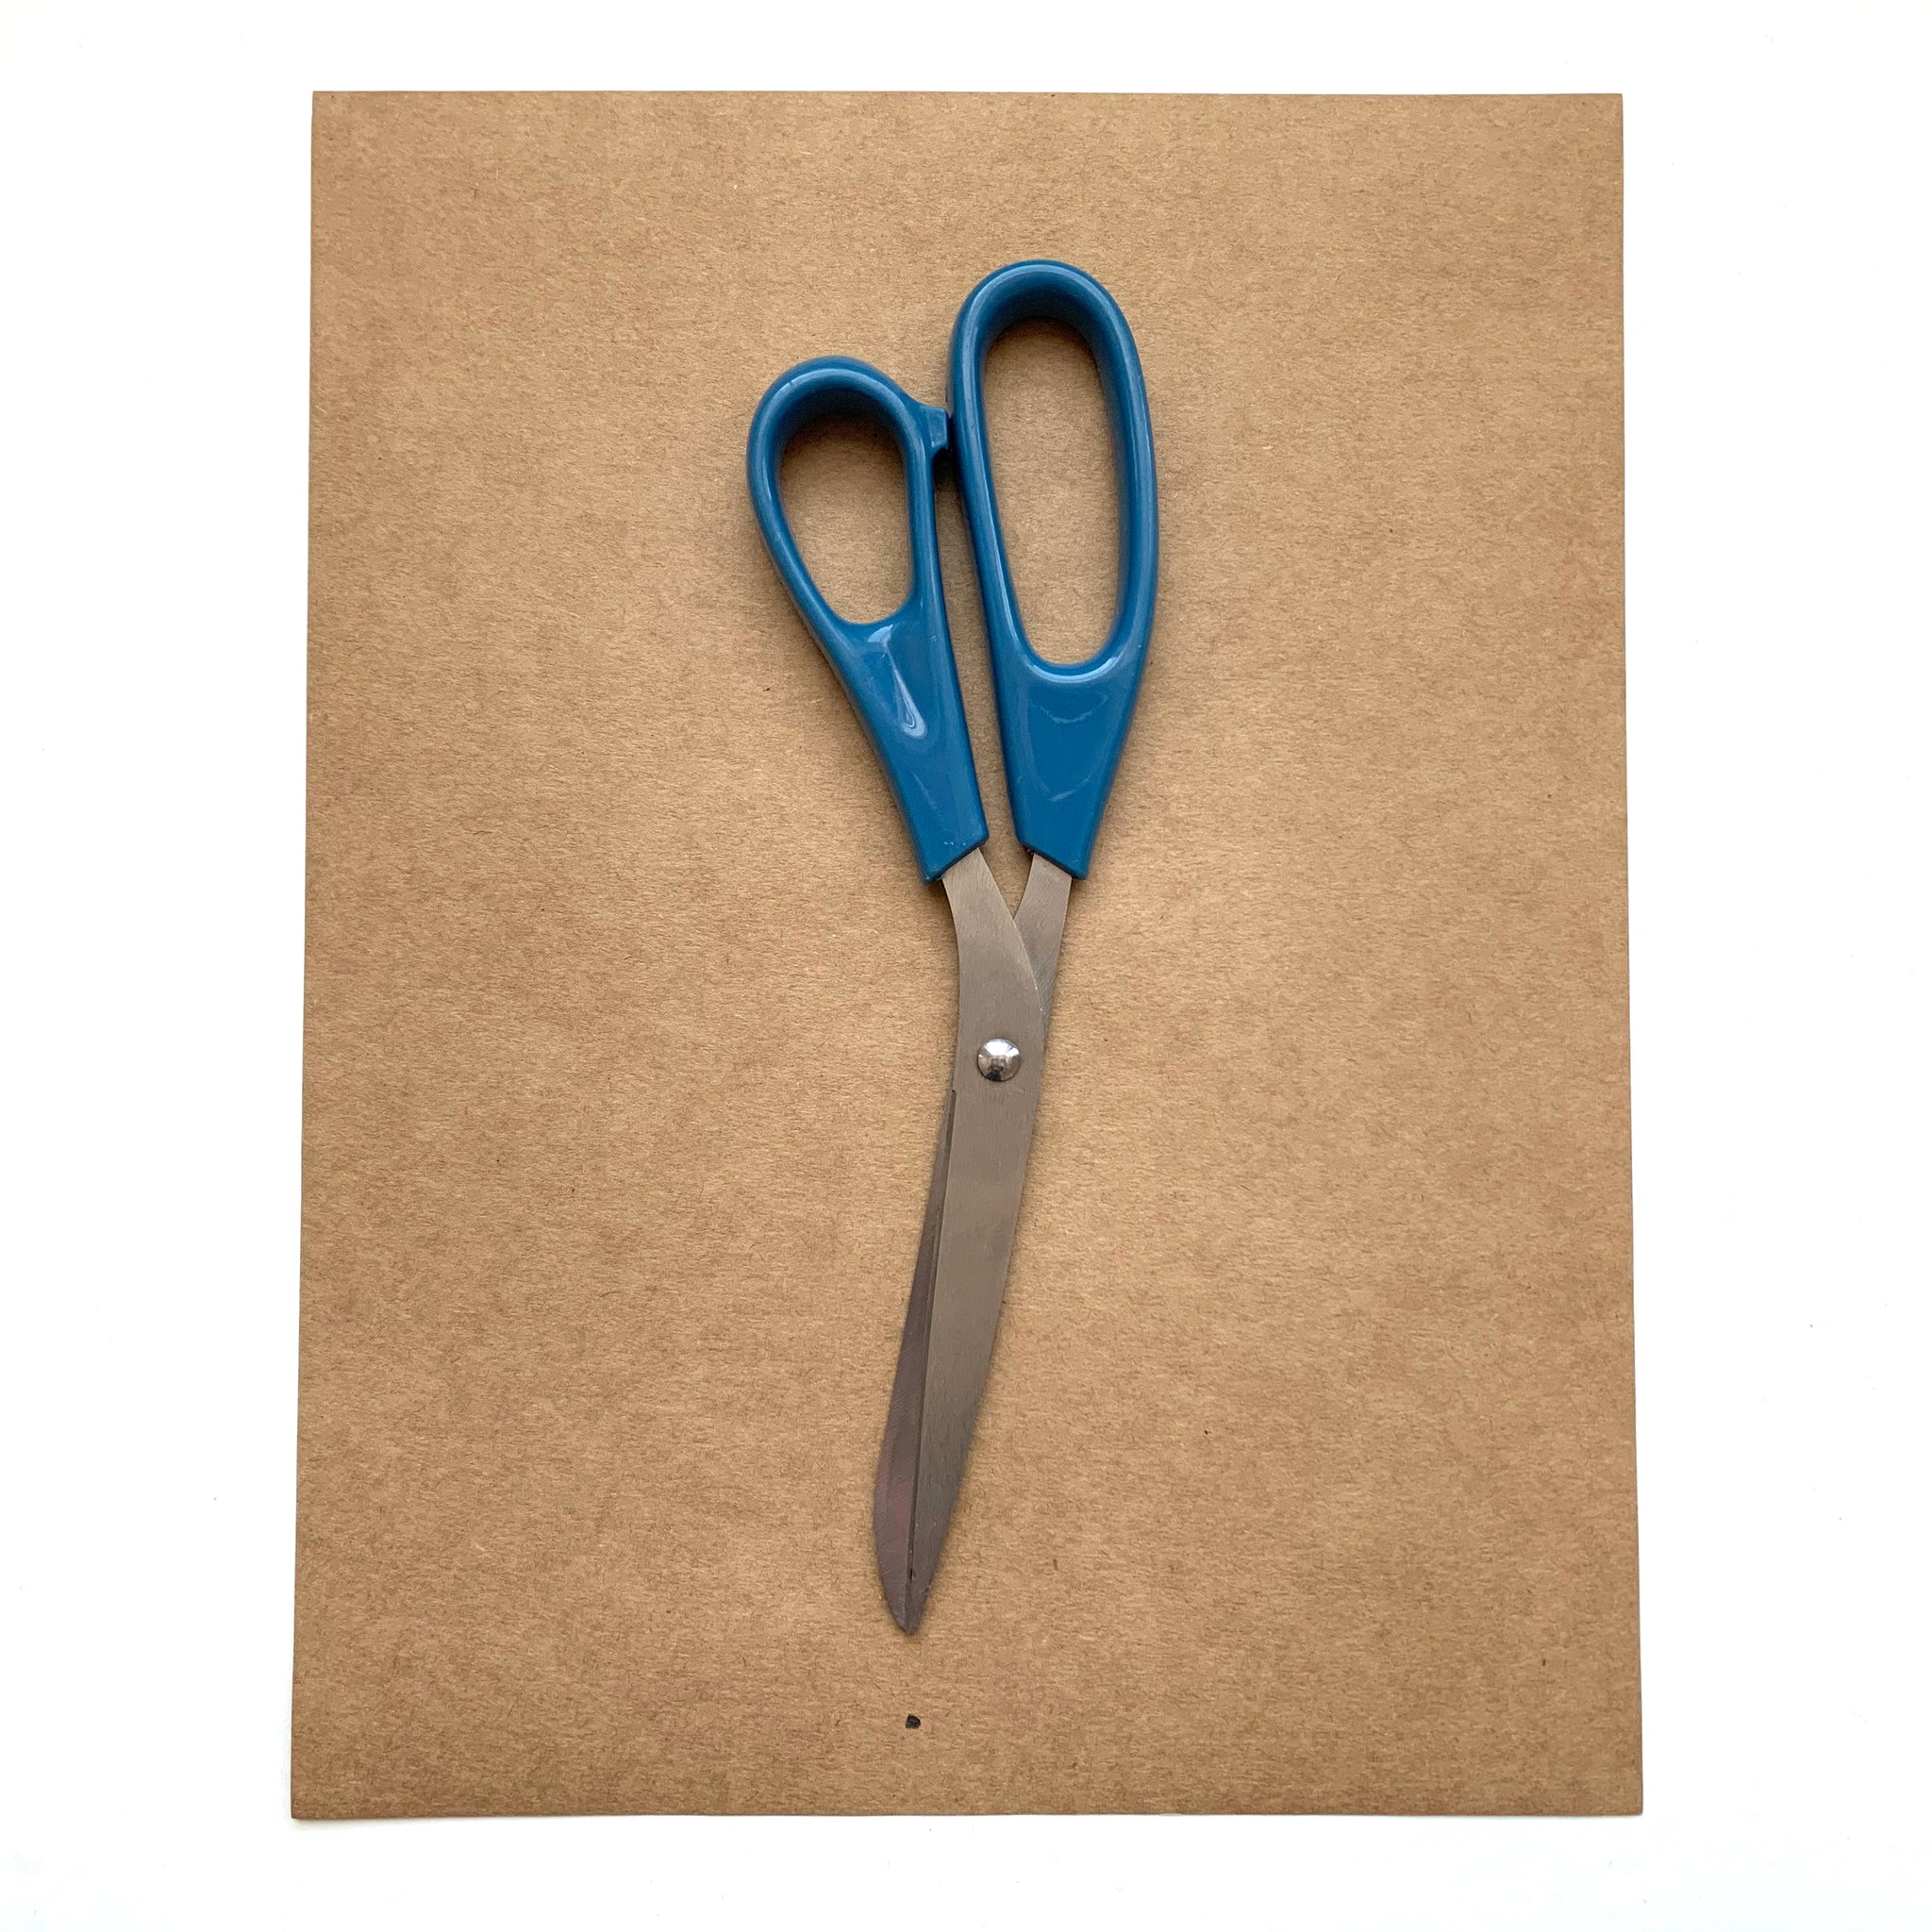 Decorative Scissors: Ideas and Tips - FeltMagnet